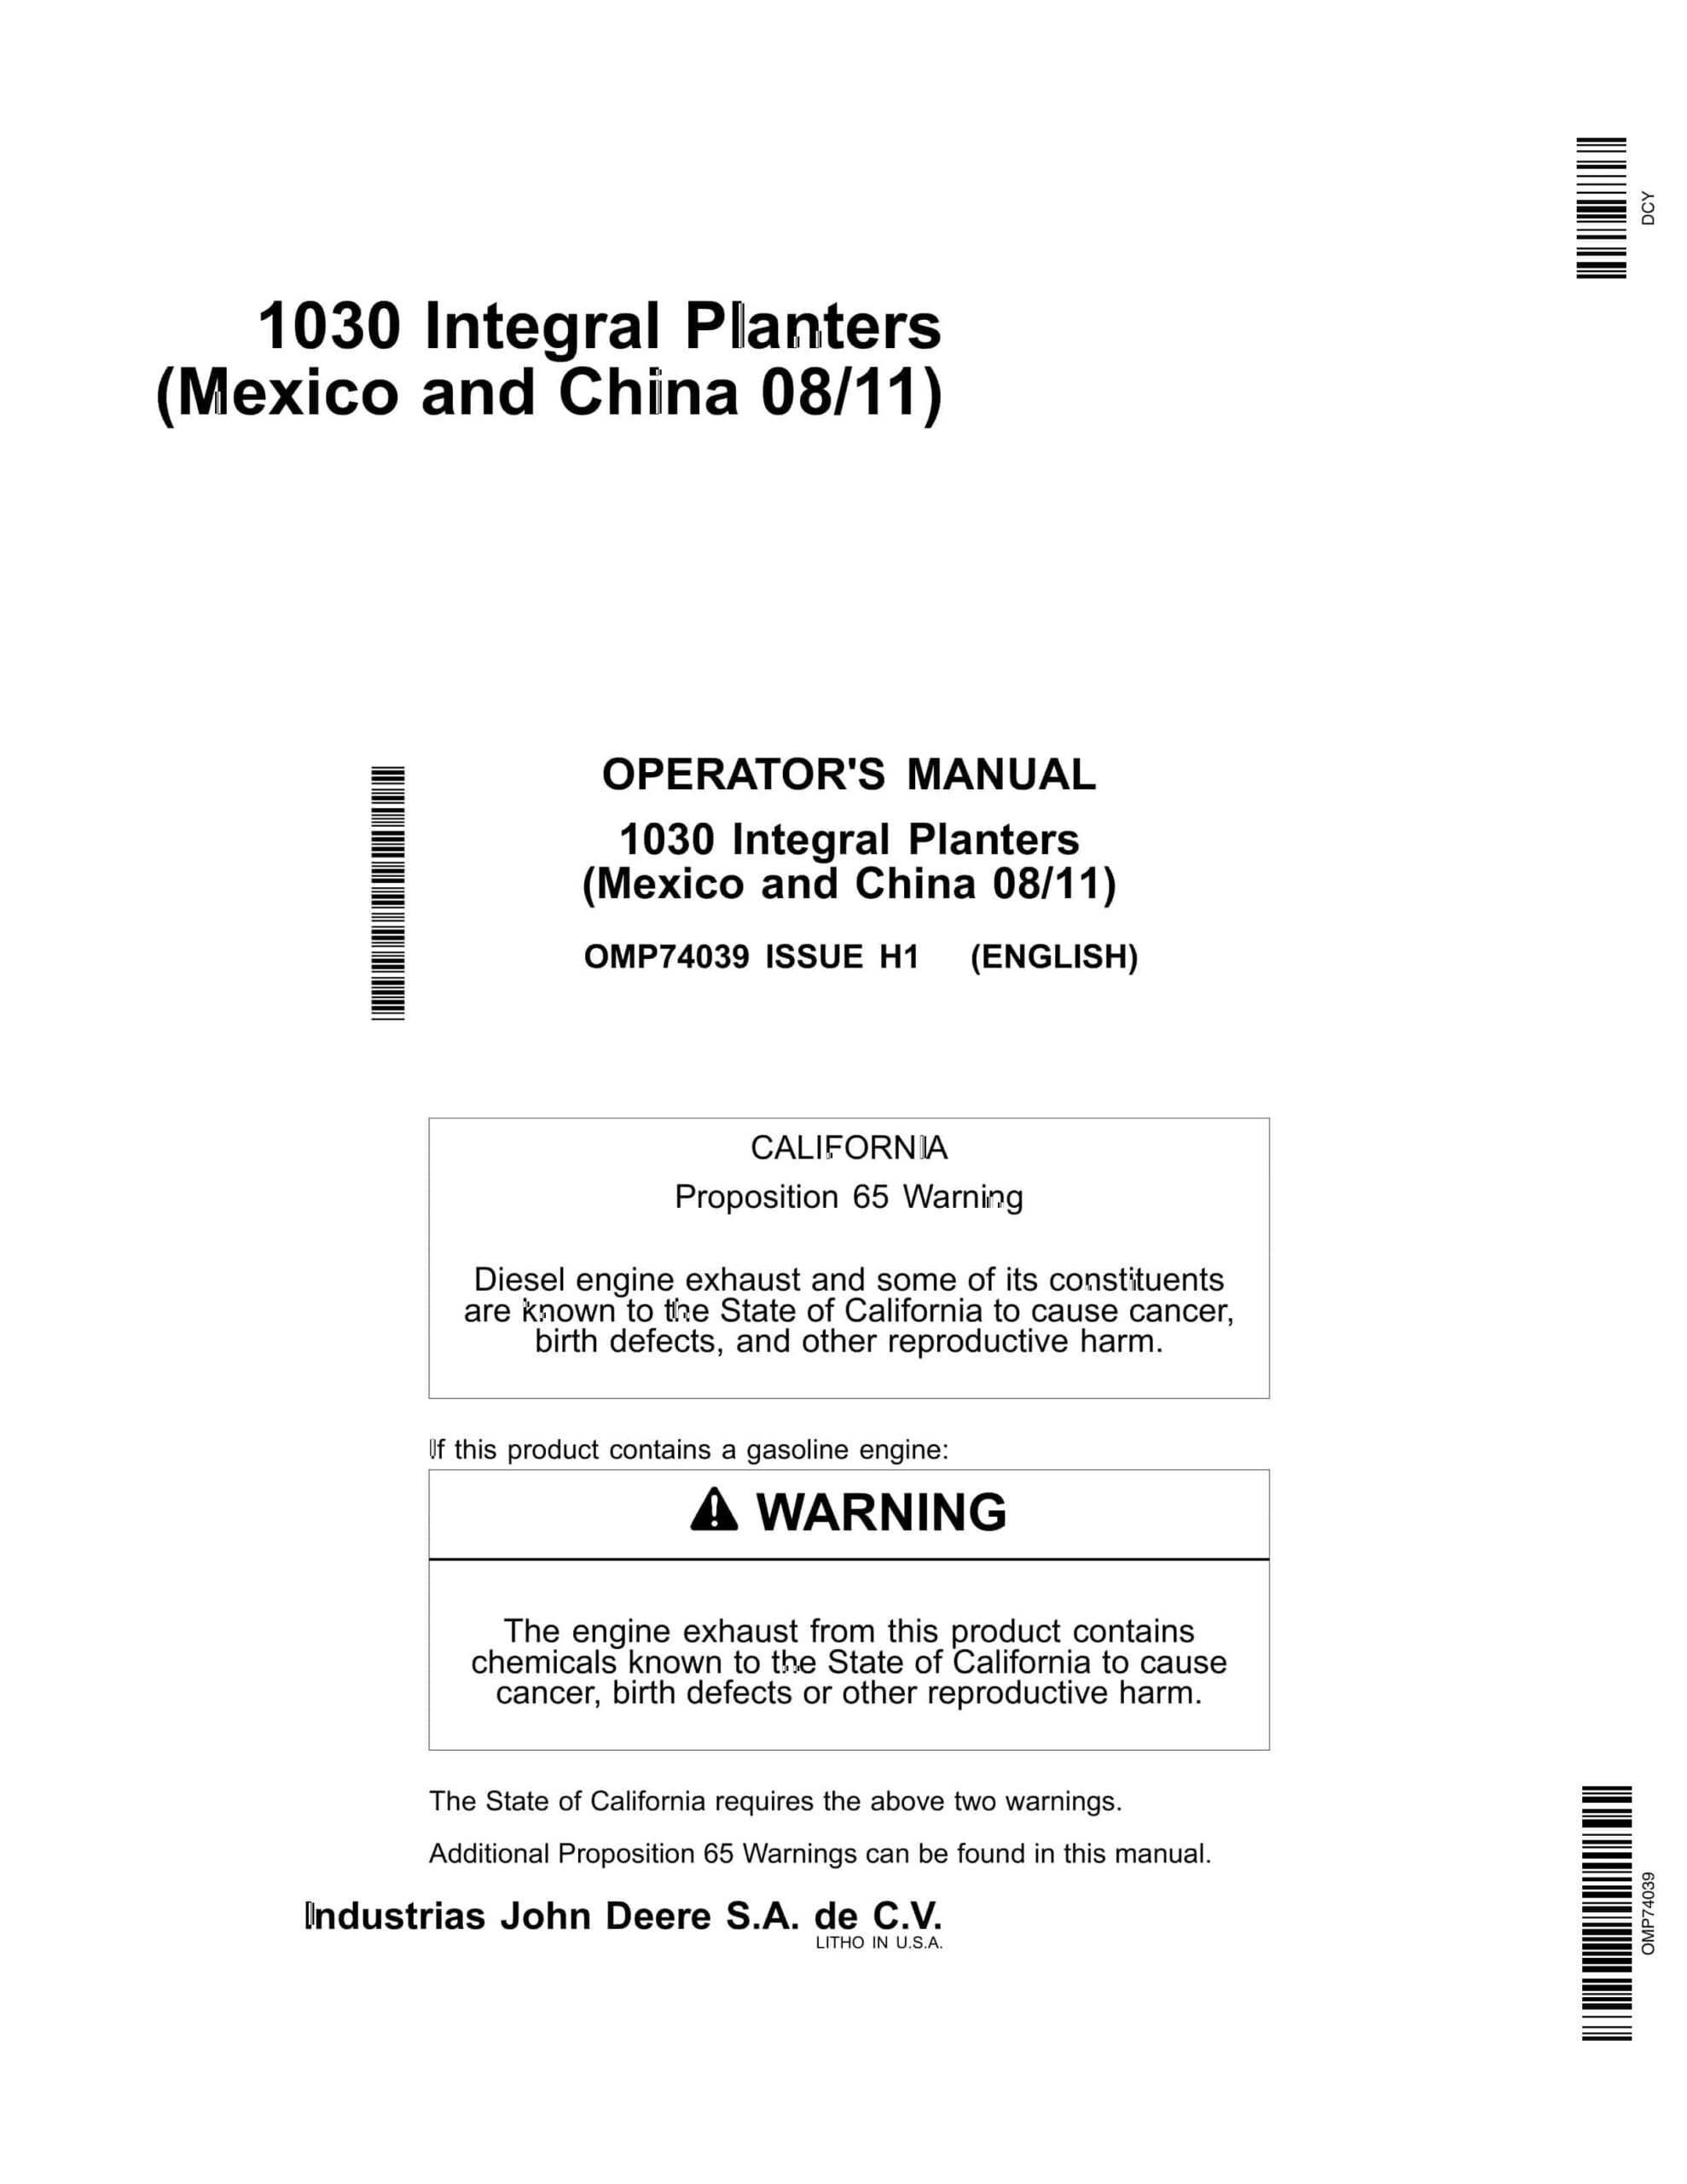 John Deere 1030 Integral Planter Operator Manual OMP74039-1